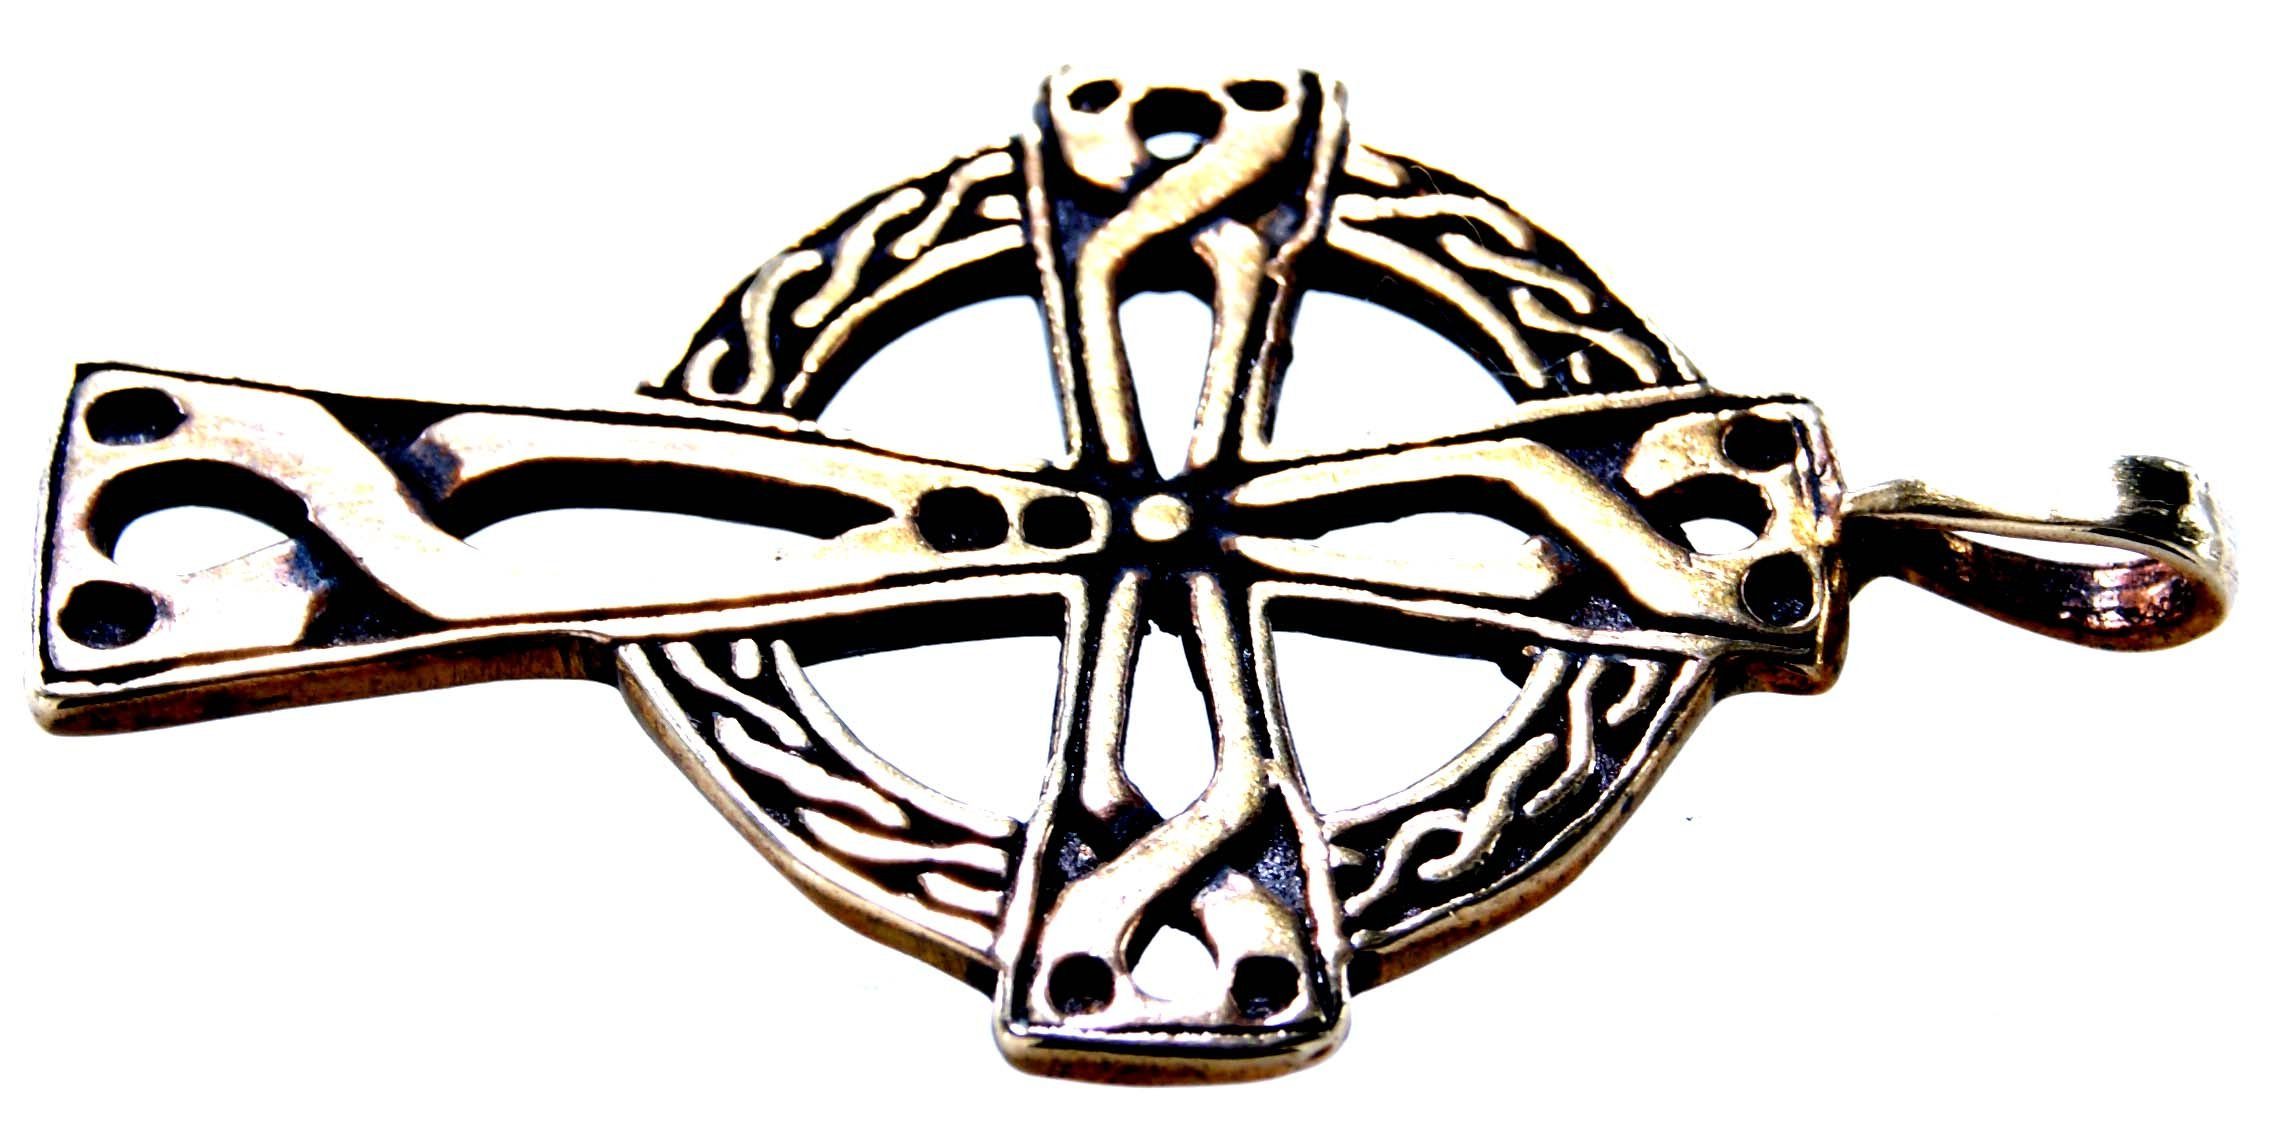 keltisch Kettenanhänger Kreuz Kiss Radkreuz Leather Anhänger Keltenkreuz of Kelten Bronze